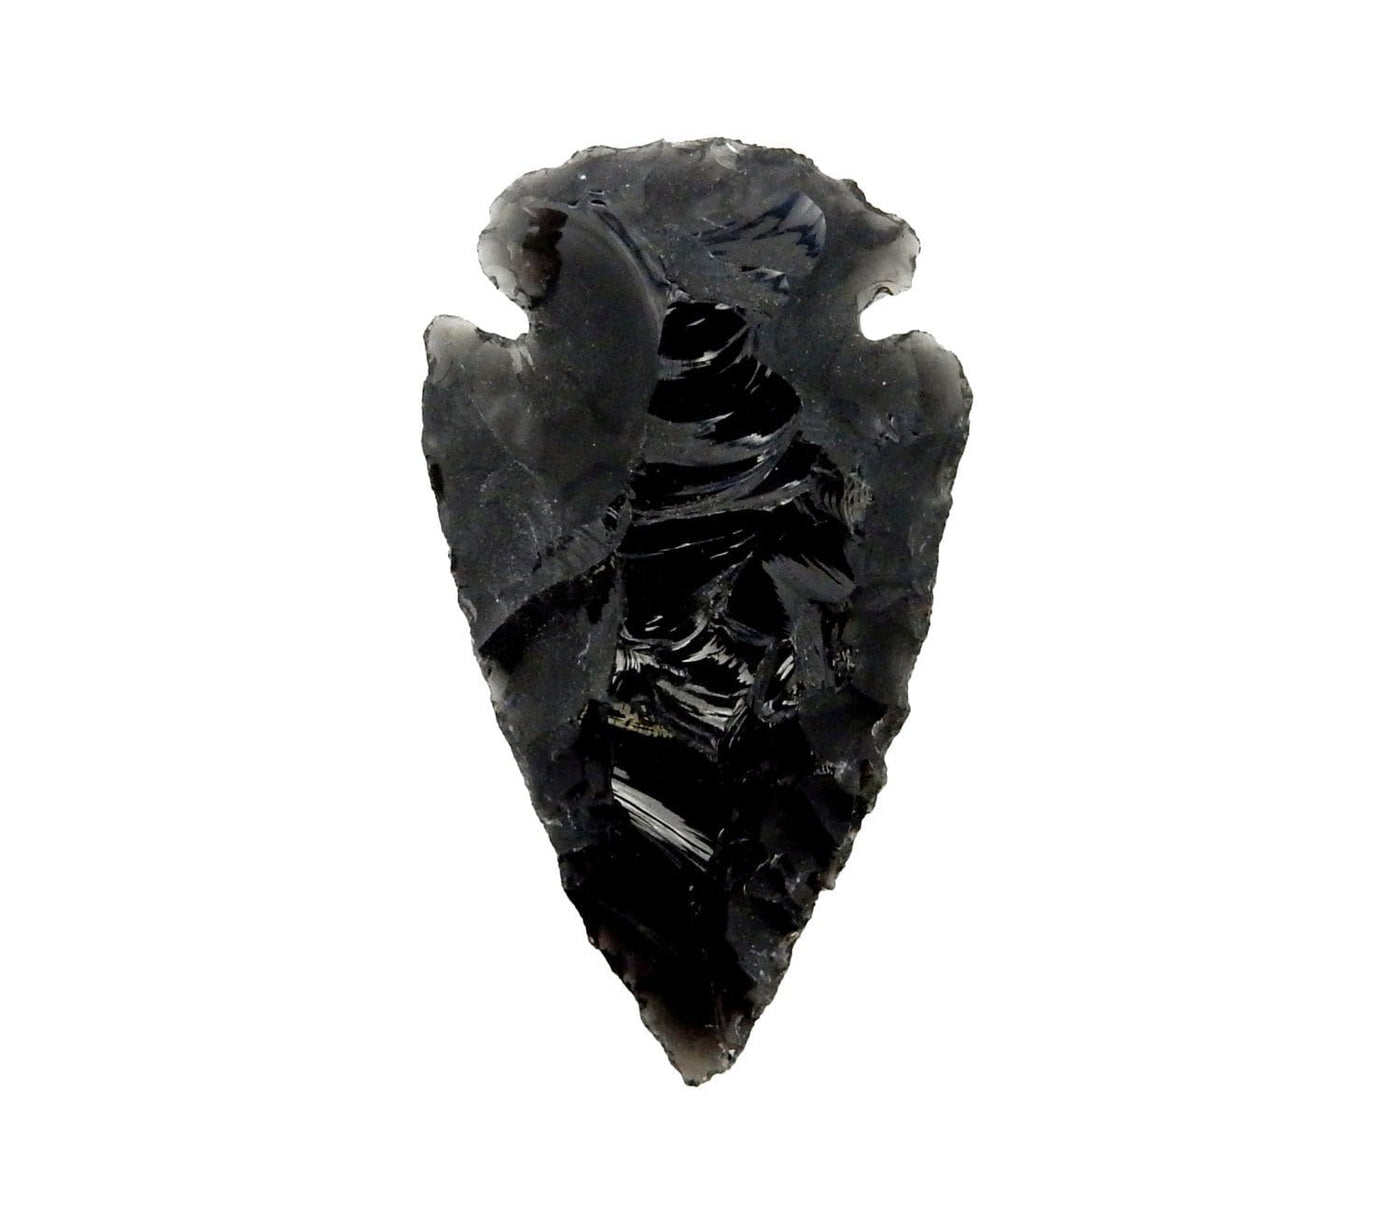 One black obsidian arrowhead on a white background.